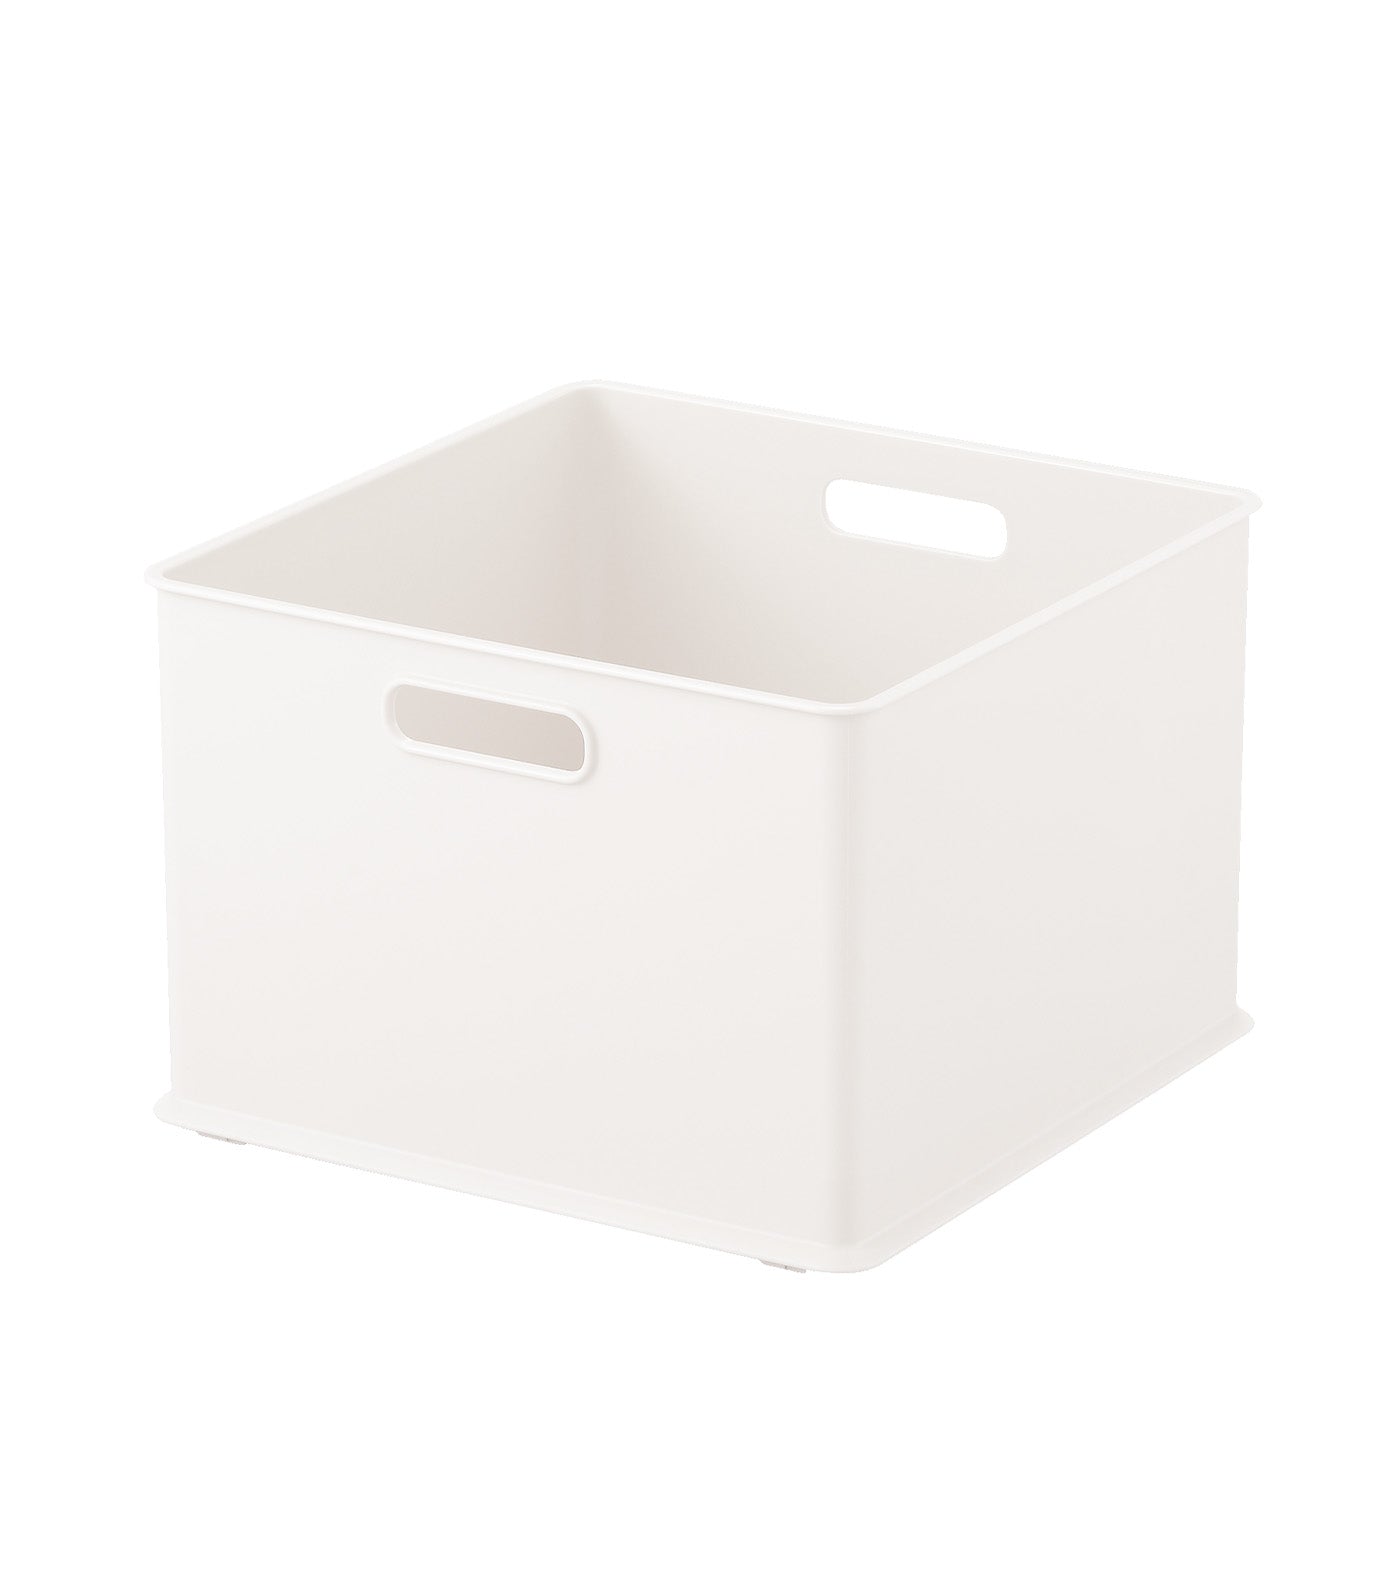 MakeRoom In Box Tall - White